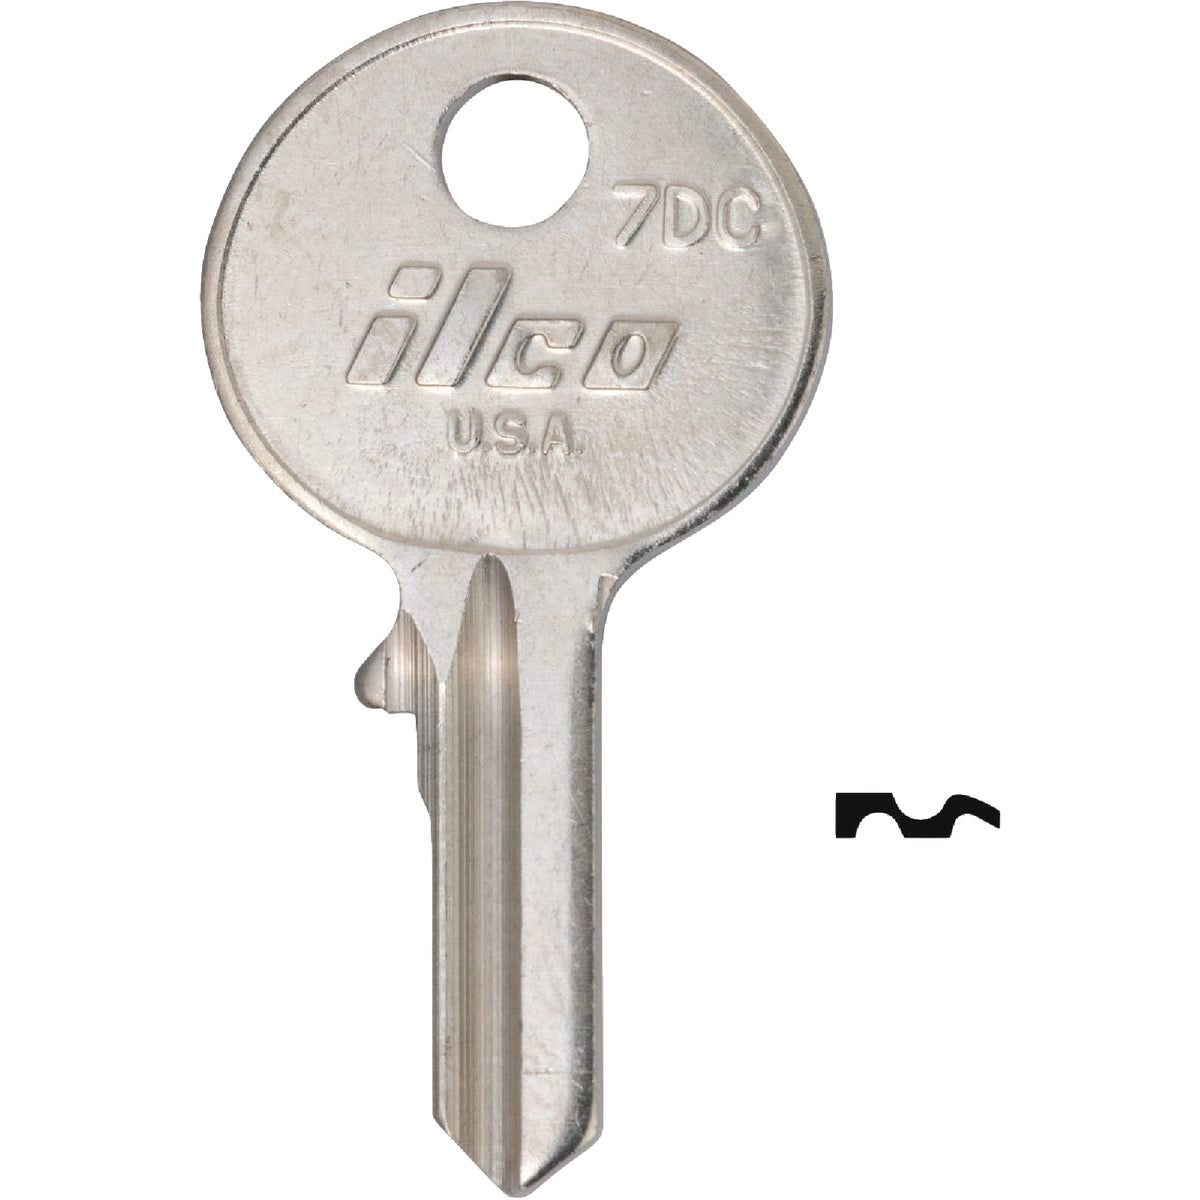 ILCO LA Keyway Key Blank, 7DC (10-Pack)